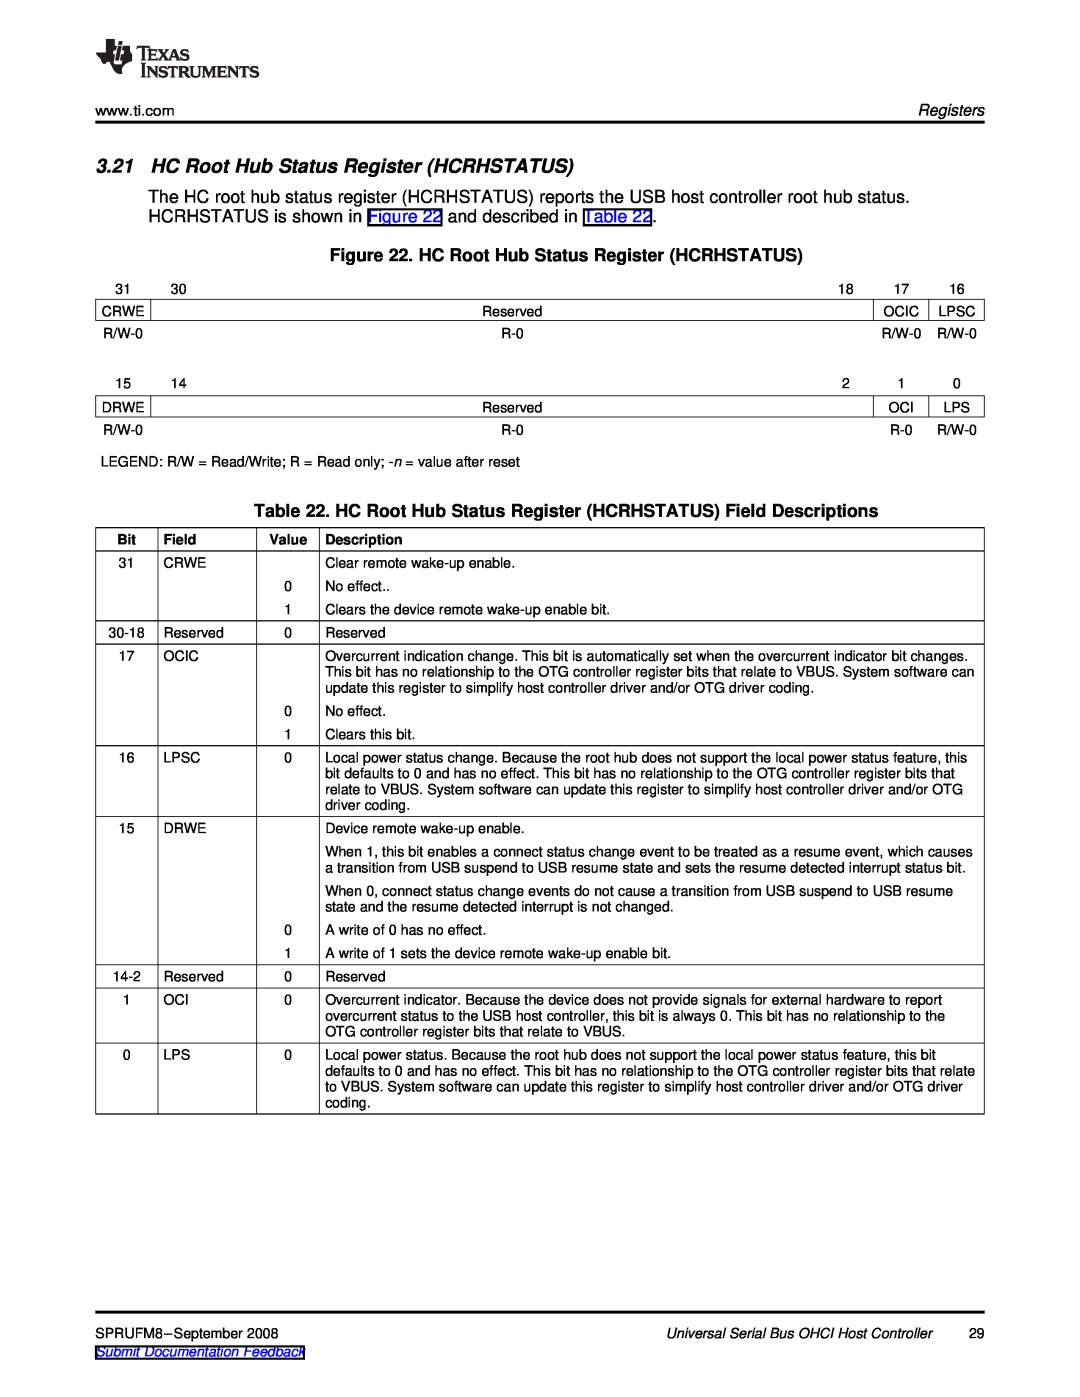 Texas Instruments TMS320C6747 DSP manual HC Root Hub Status Register HCRHSTATUS, Field, Description 